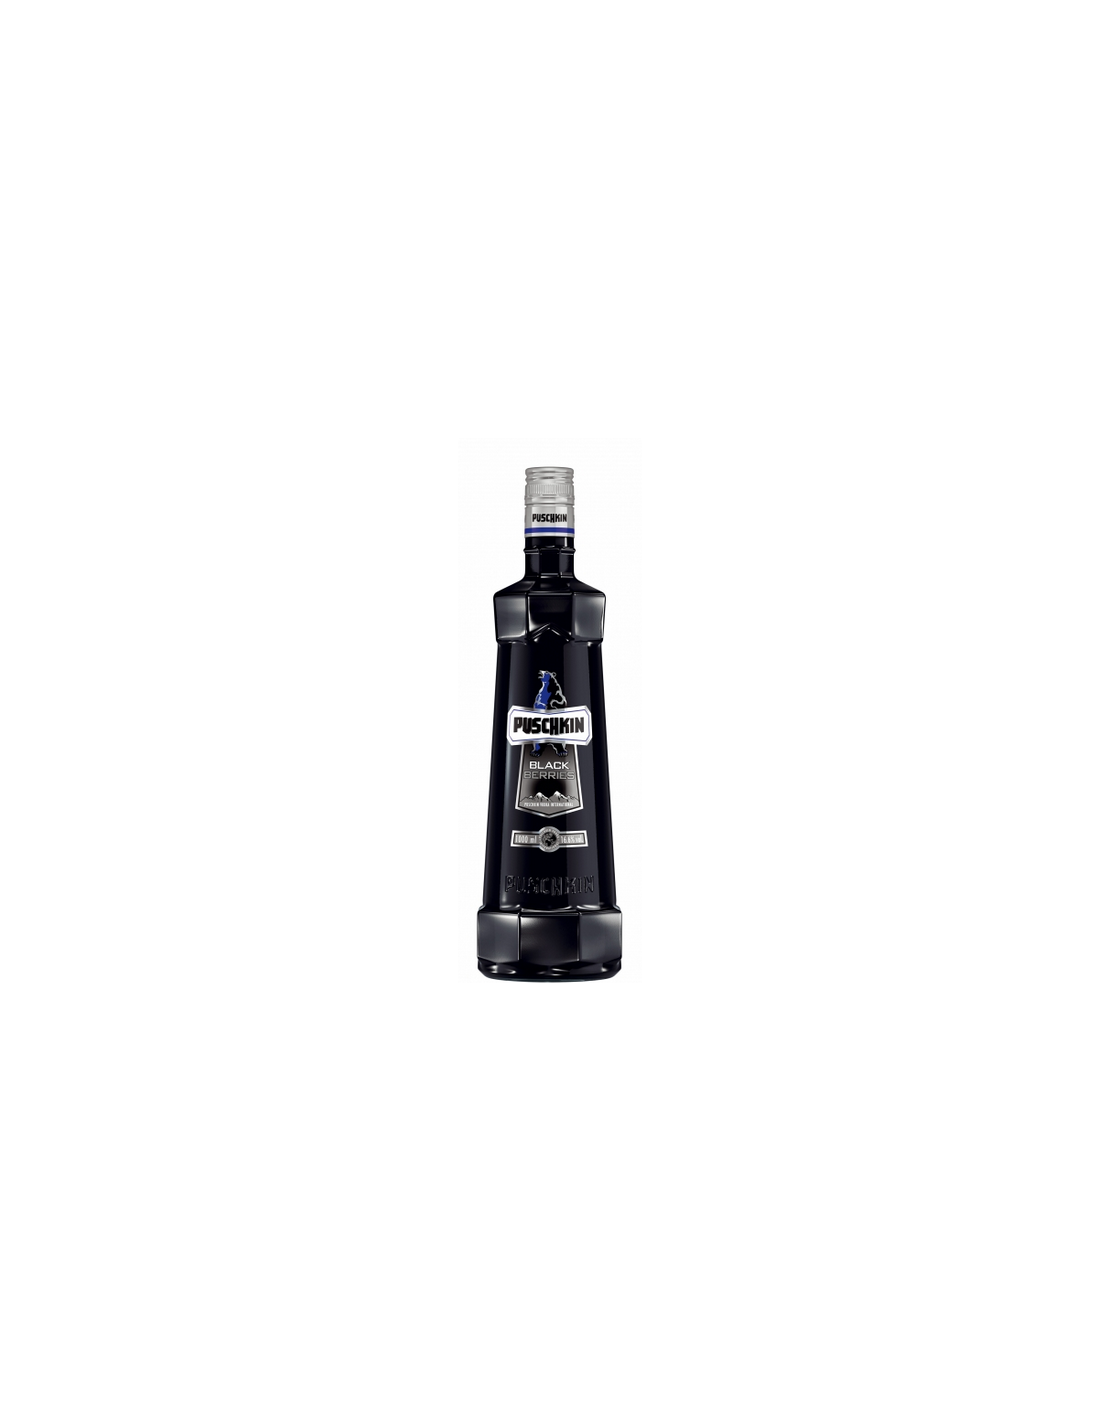 Lichior Puschkin Black Berries, 0.7L, 16.6% alc., Germania alcooldiscount.ro